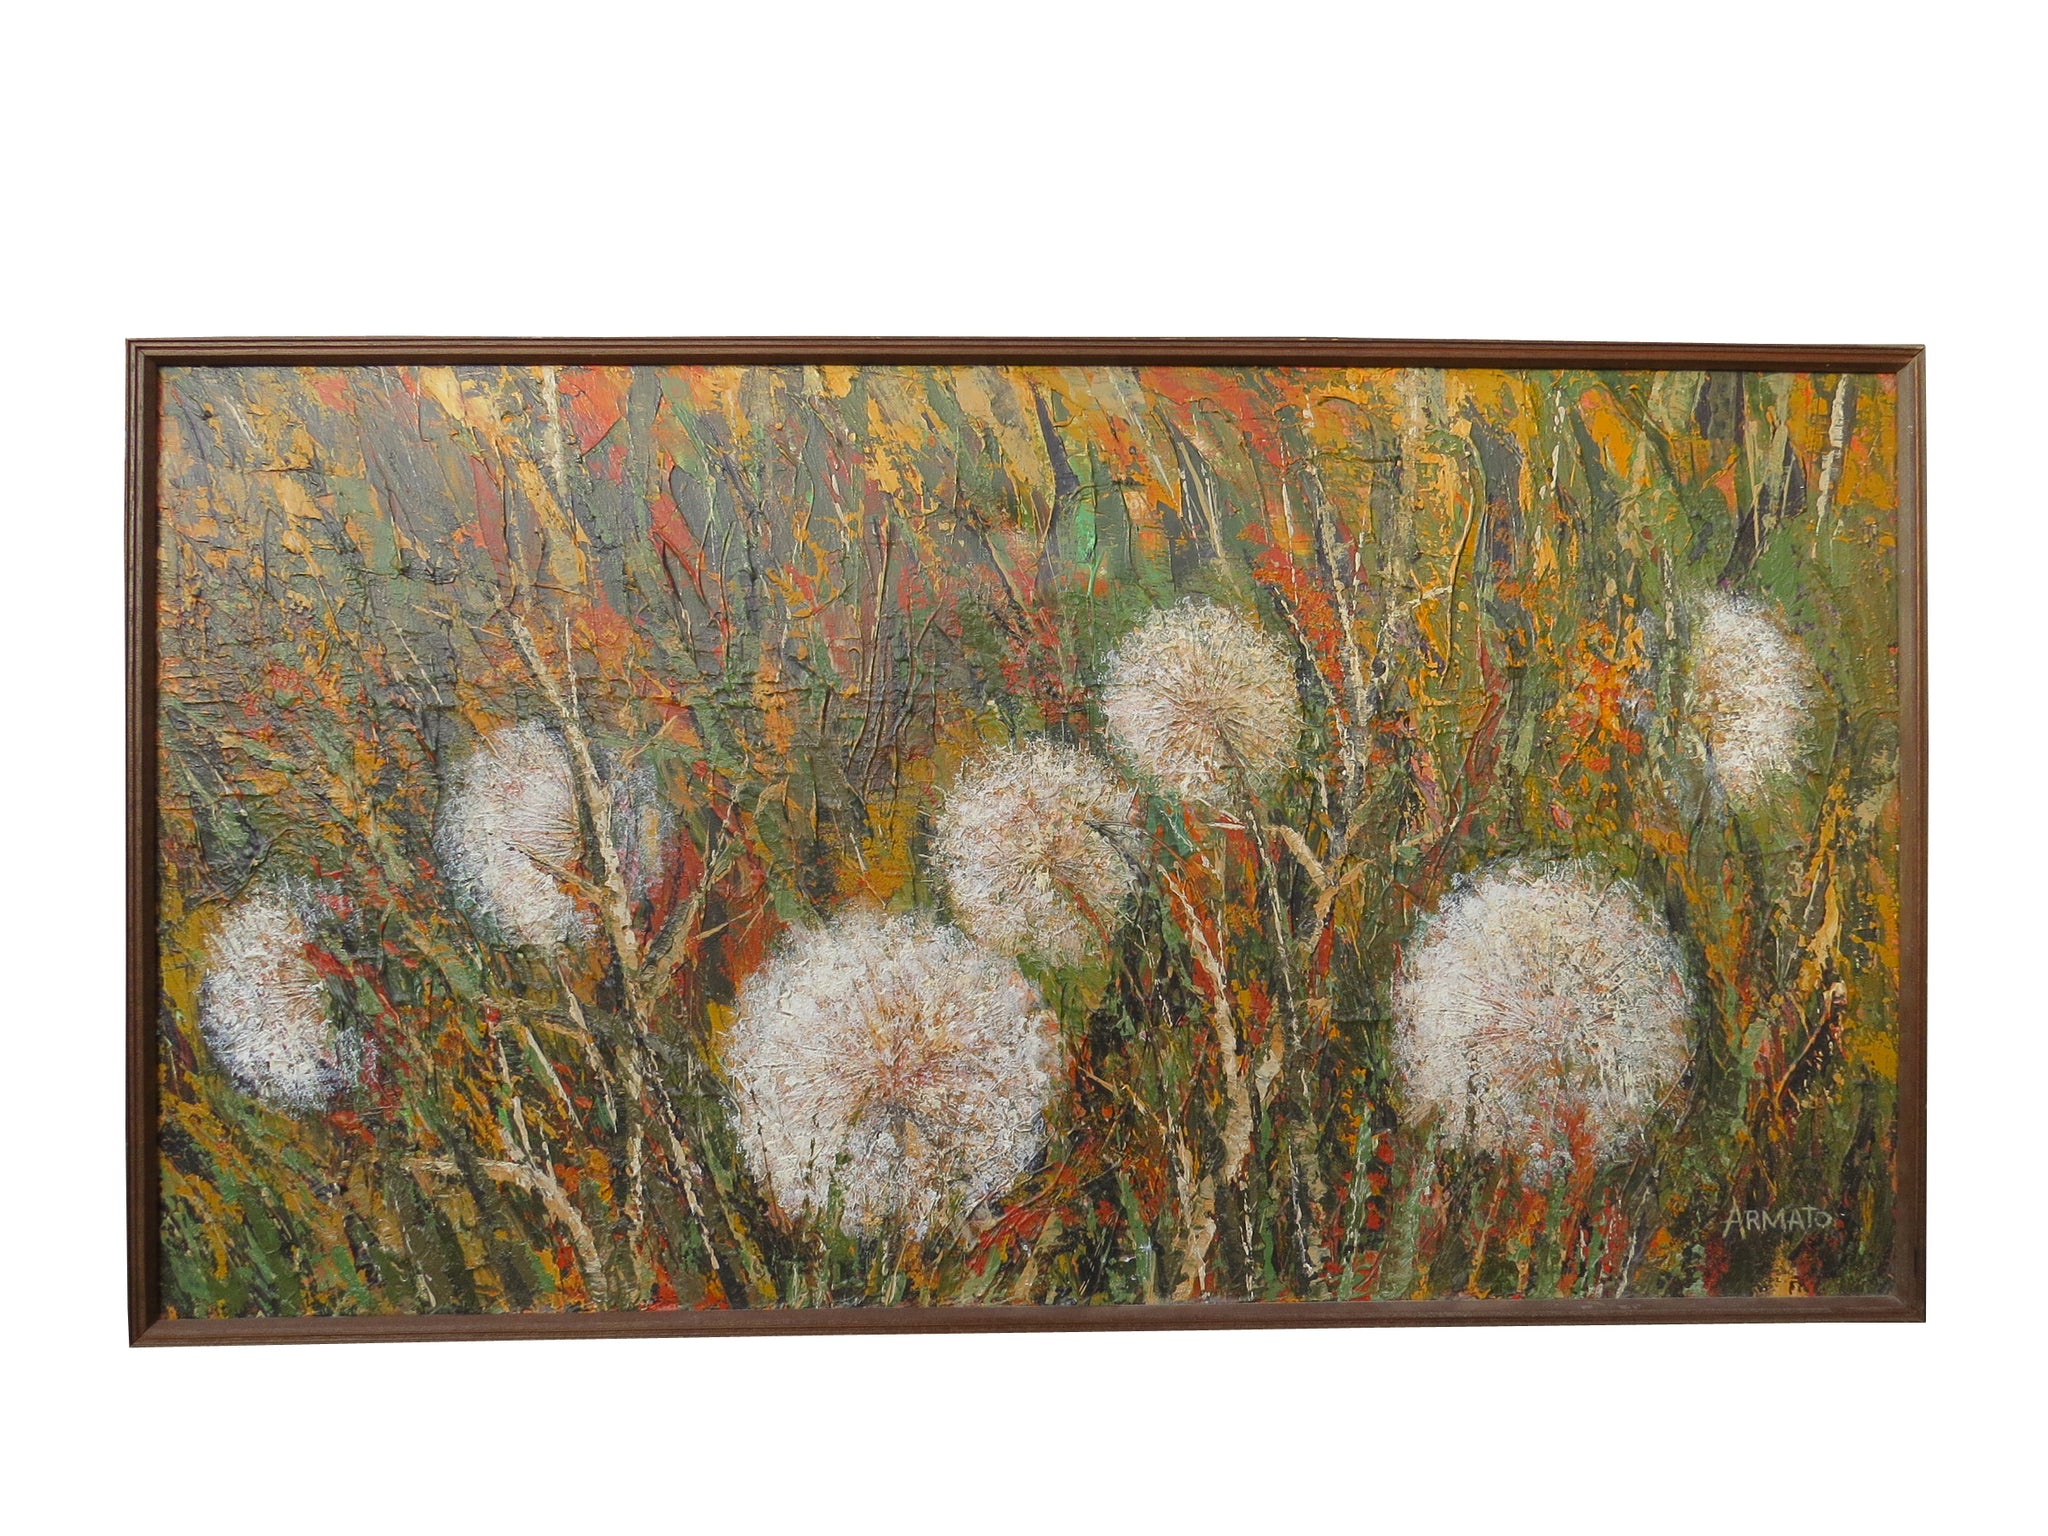 edgebrookhouse - Modern Impressionistic Oil on Canvas Signed Armato - Dandelion Field